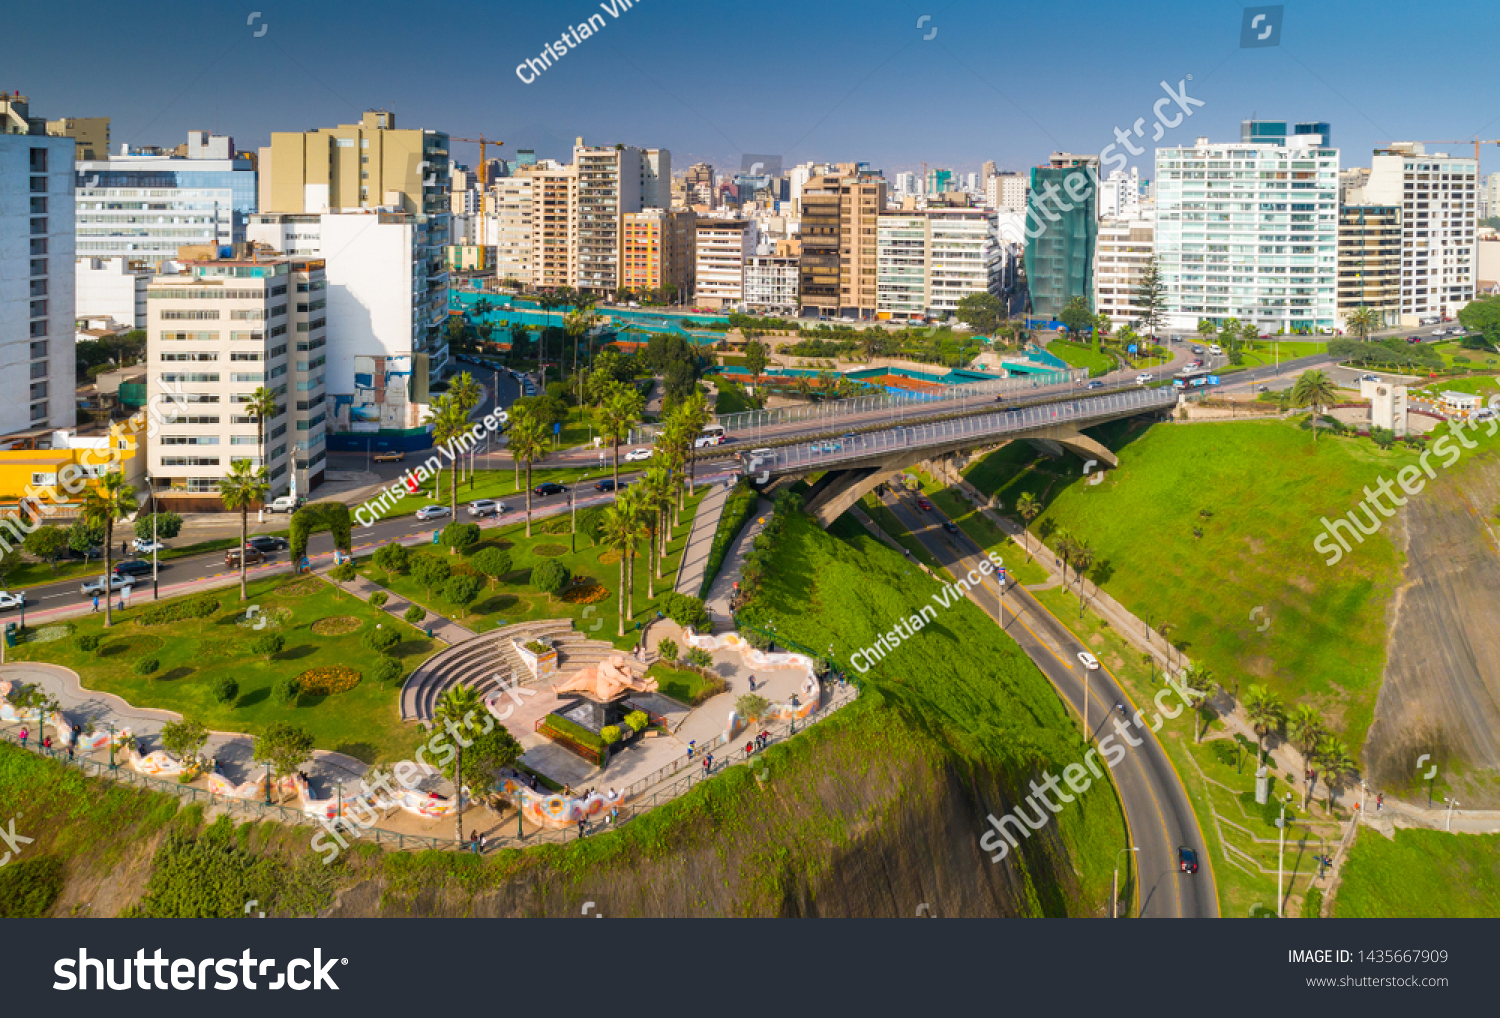 Aerial view of "Parque del Amor" in Miraflores, Lima, Peru. #1435667909